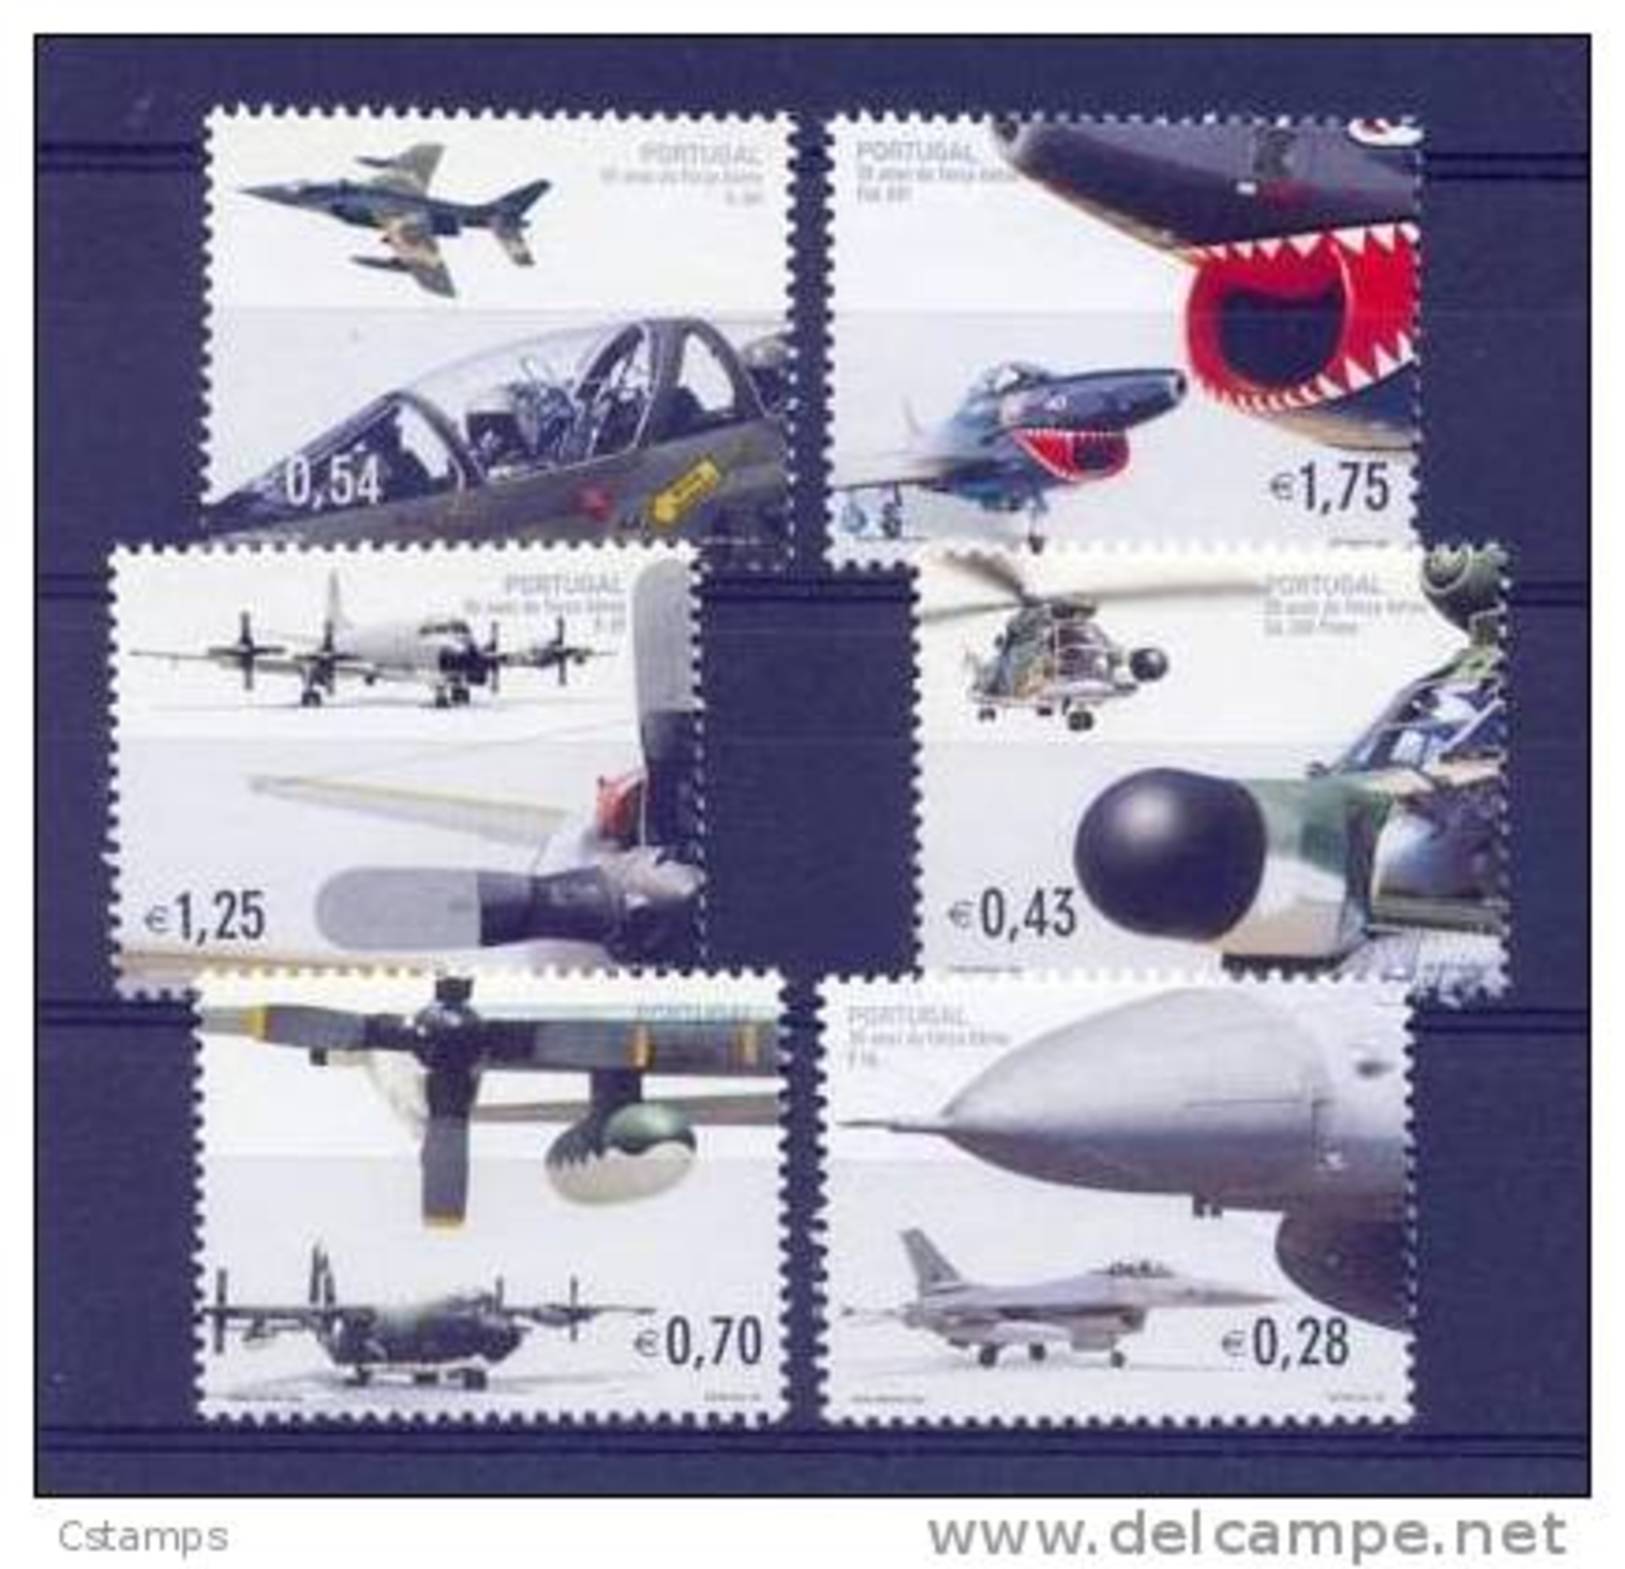 Regalo !!! A Menos Del Facial !!! - Aviacion Militar - Portugal  - Scott 2491 Al 2496 - Año 2002 - Serie De 6 Sellos. - Local Post Stamps